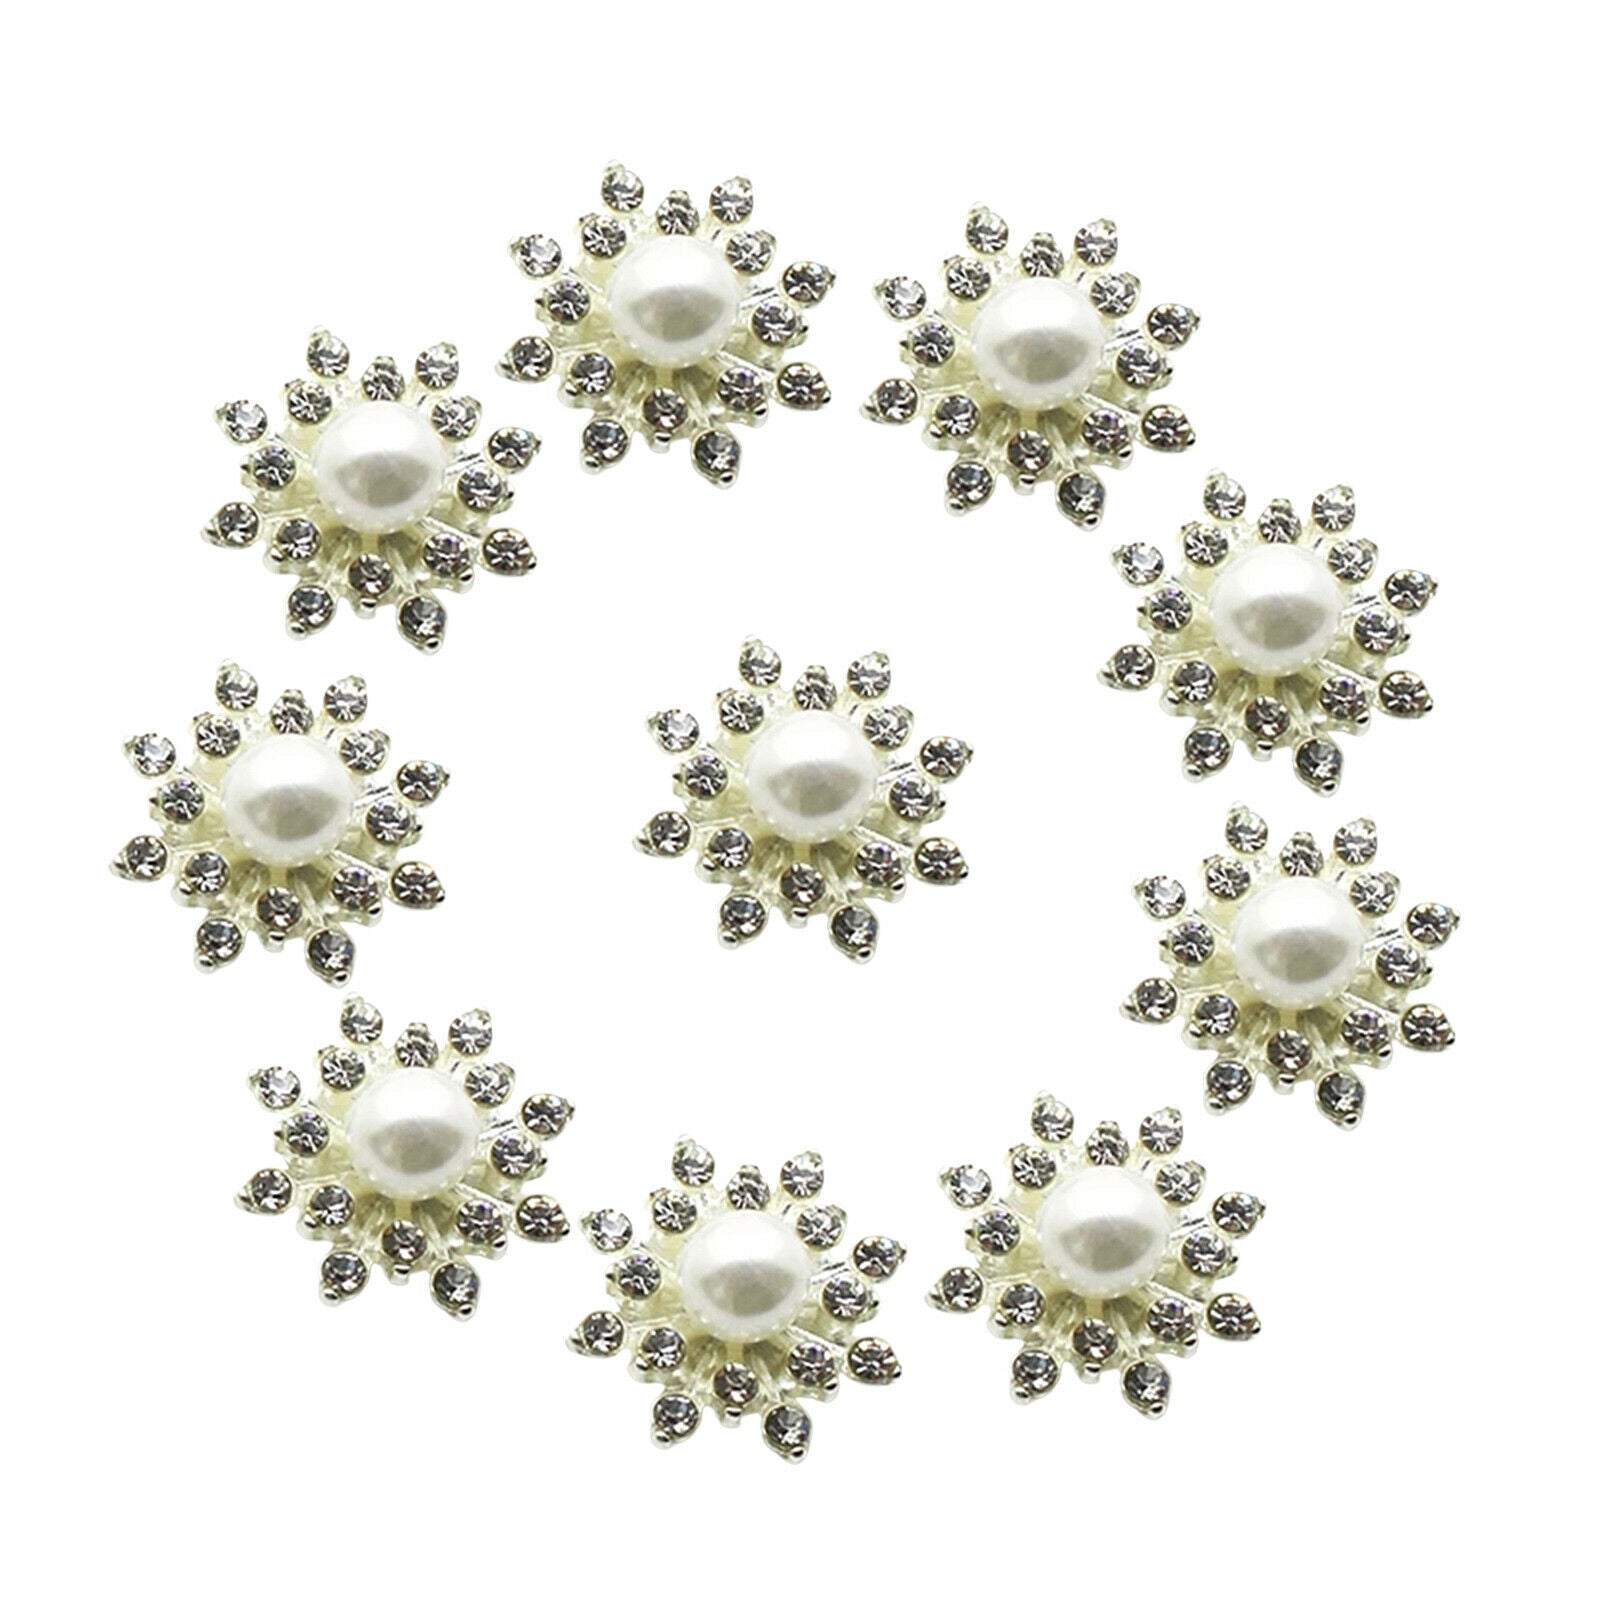 10pcs/set 16mm Rhinestone Embellishments Glitter for Buttons Flower Dress